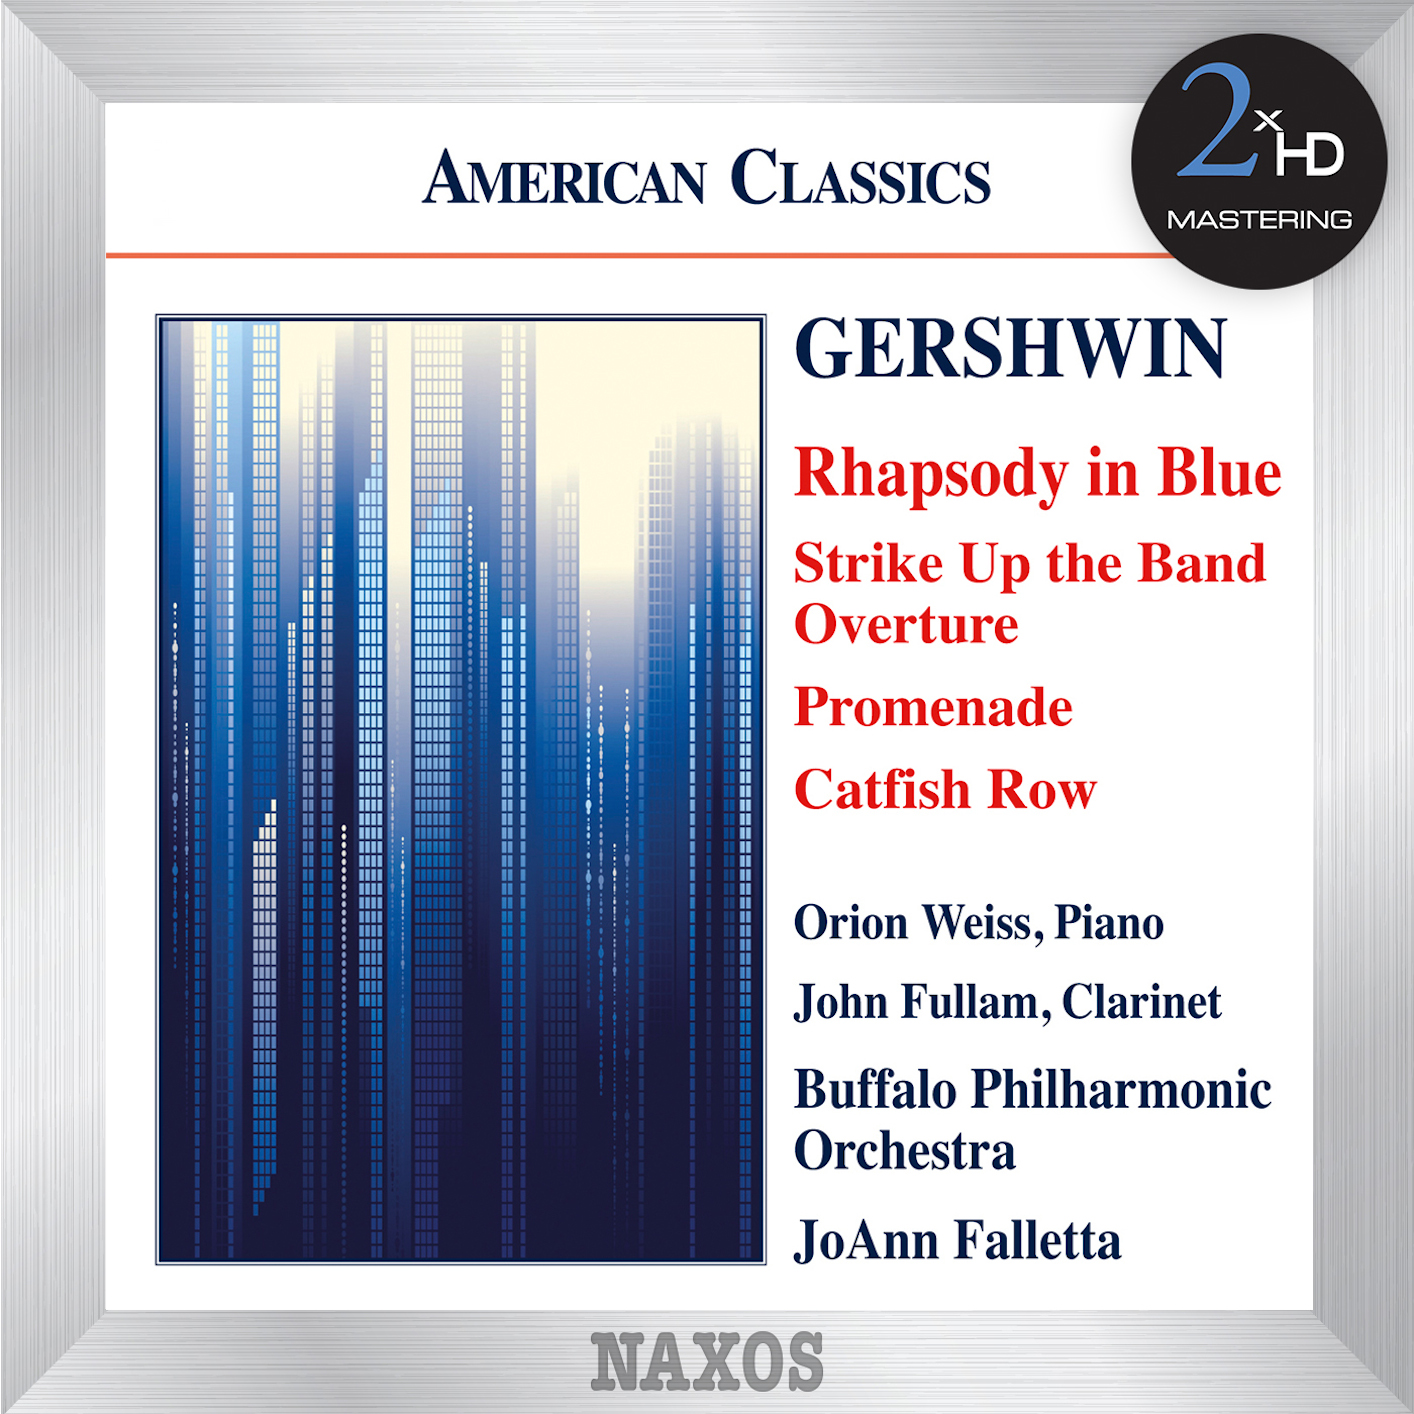 Orion Weiss, John Fullam, Buffalo Philharmonic Orchestra, JoAnn Falletta - Gershwin: Rhapsody in Blue - Strike Up the Band: Overture - Promenade - Catfish Row (2015) 24bit FLAC Download